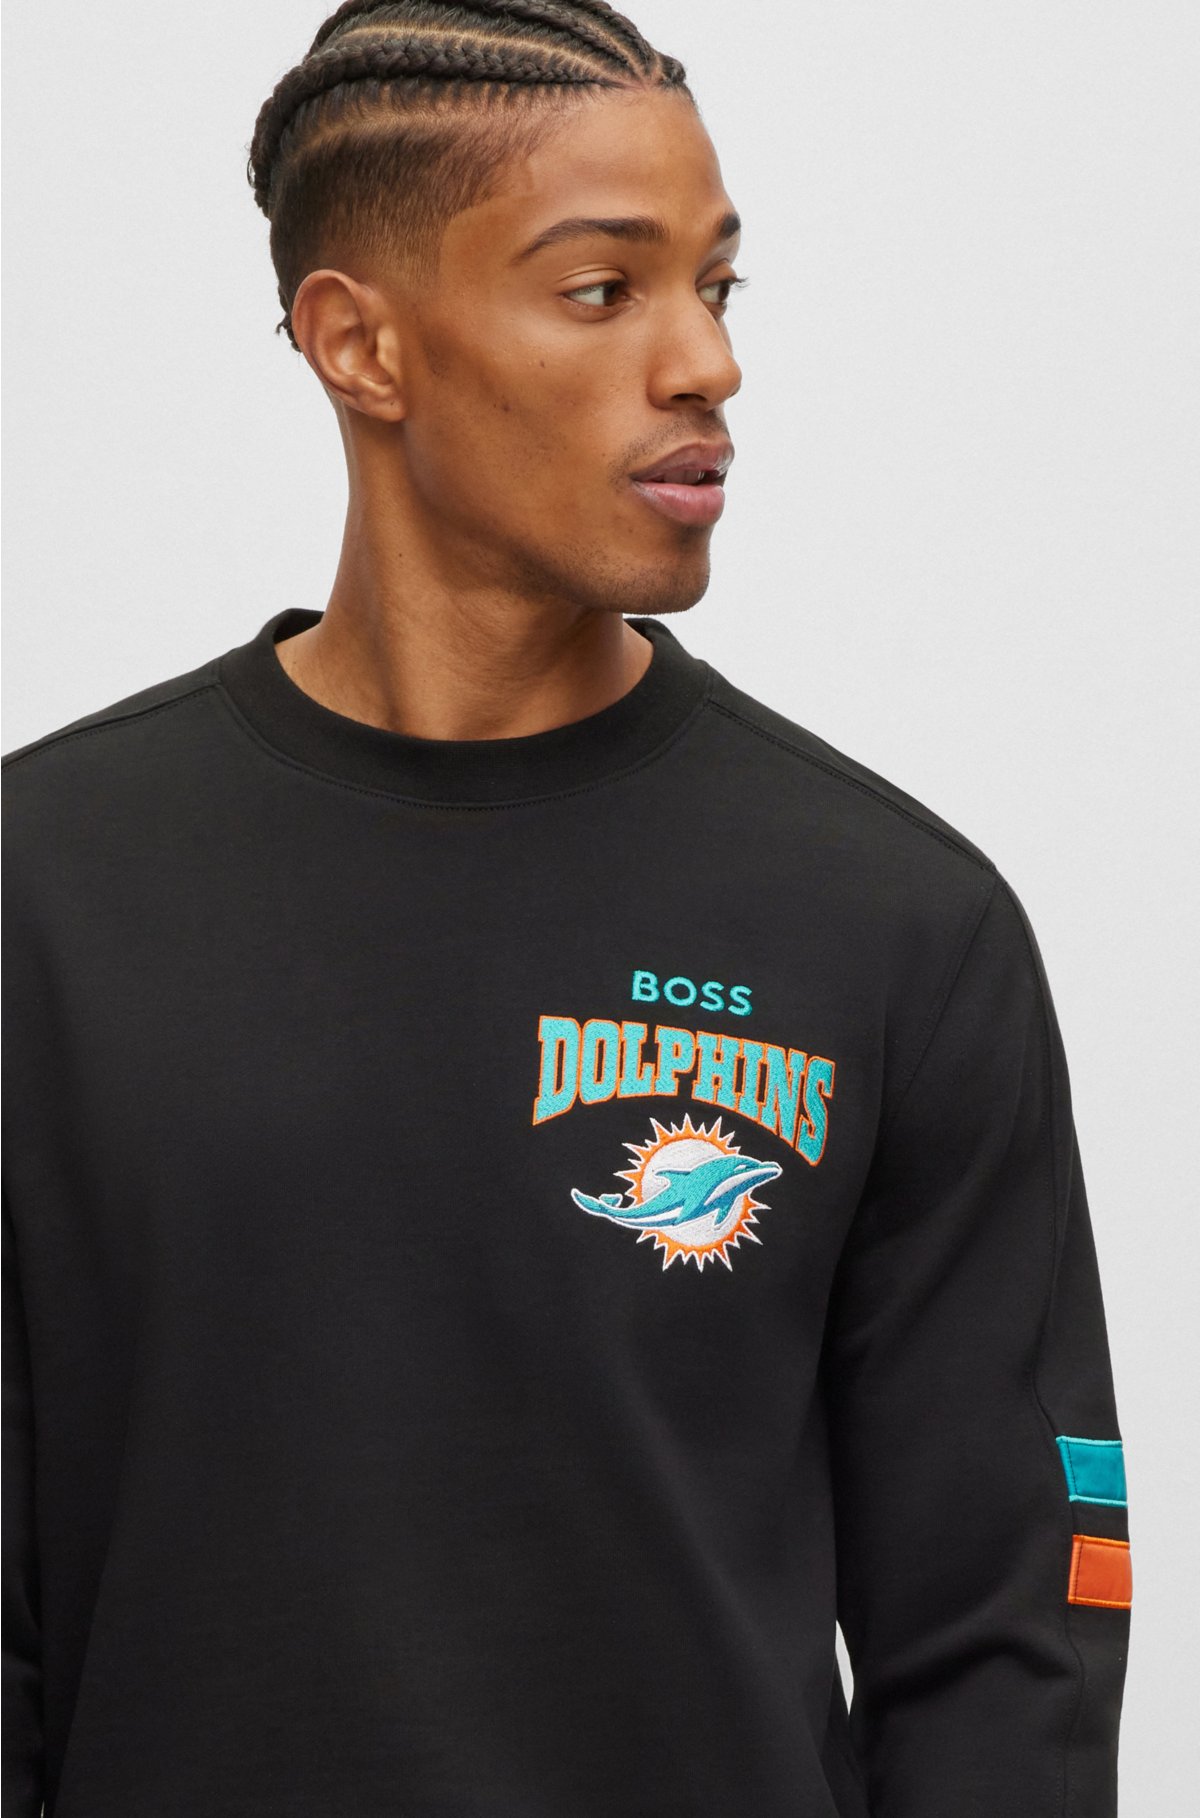 BOSS by HUGO BOSS Miami Dolphins Sweatshirt in Black for Men